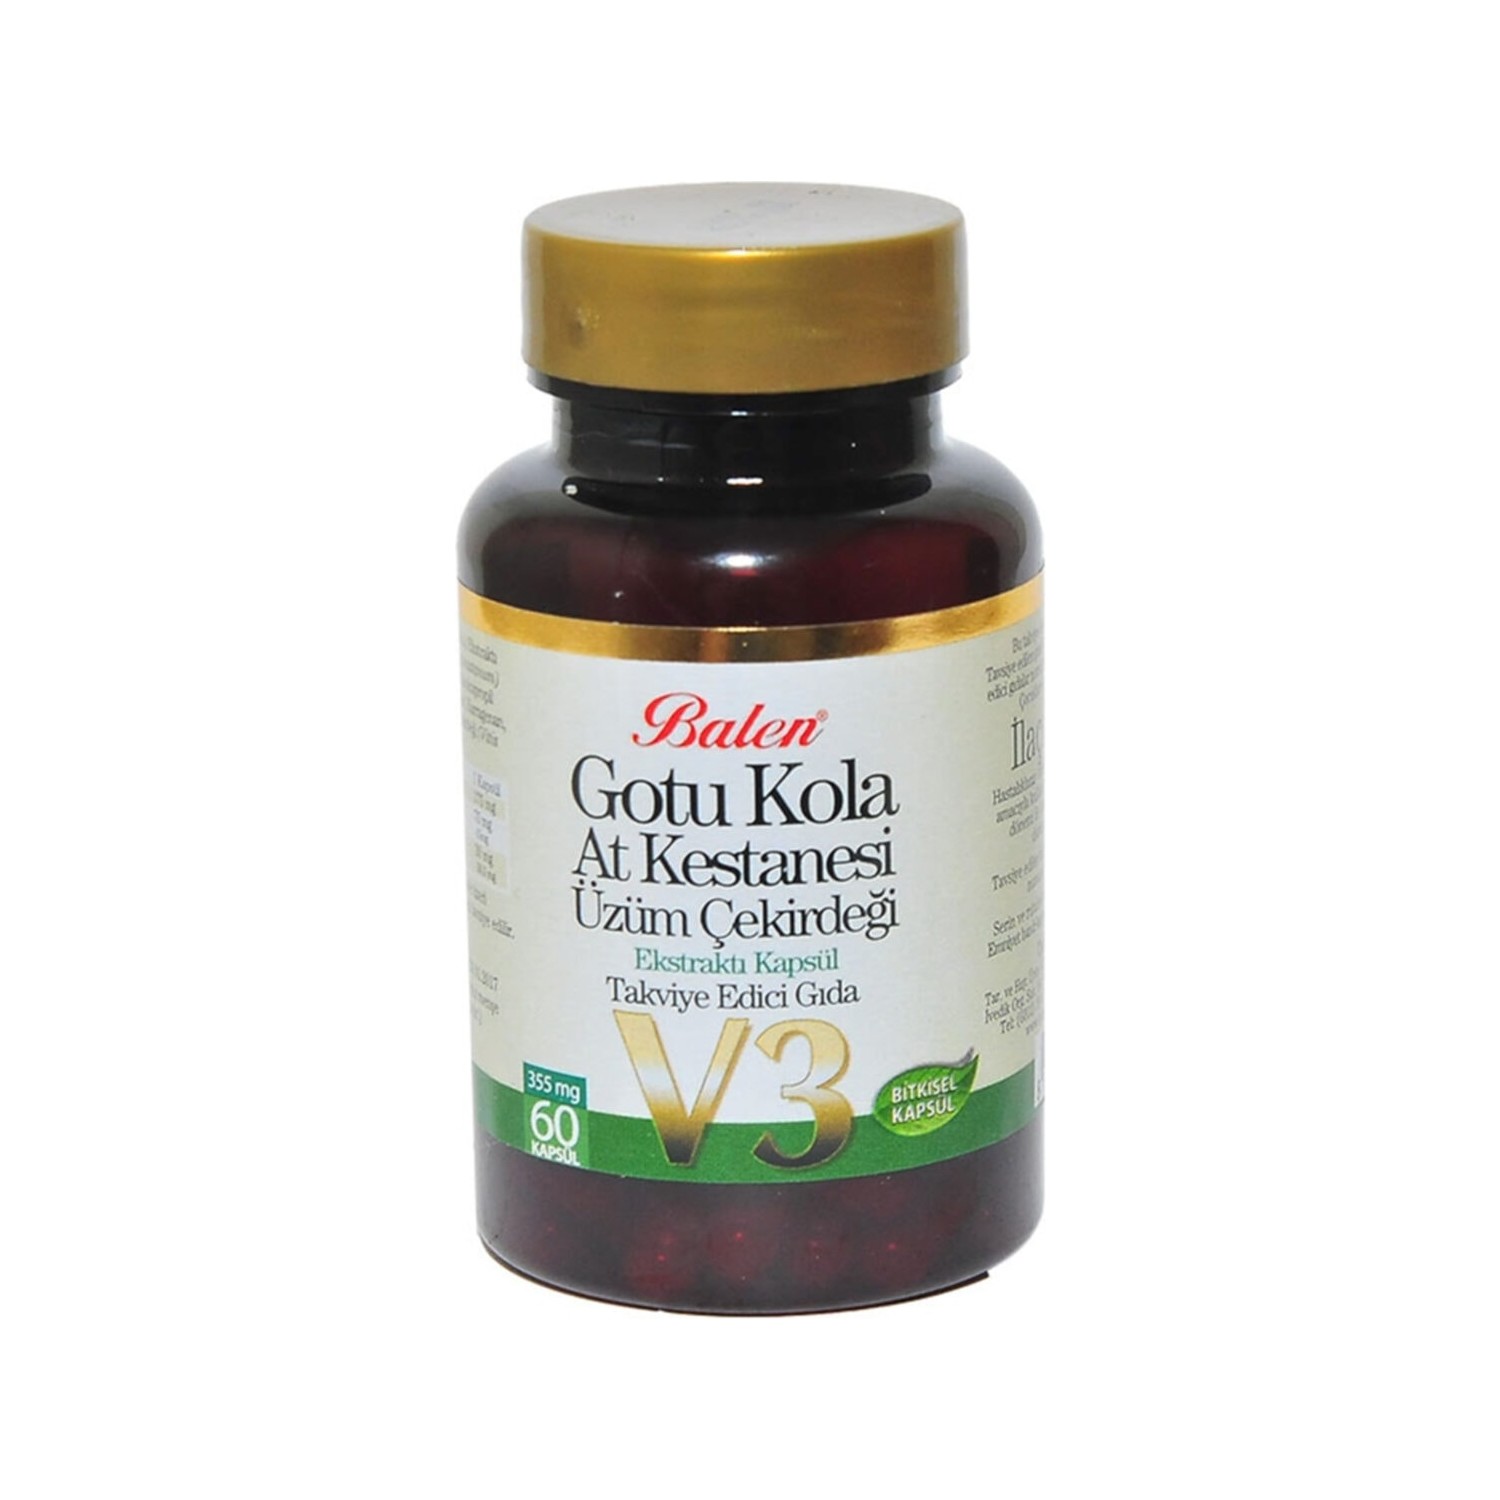 Активная добавка Balen Gotu Kola Horse Chestnut Grape Seed Extract V3, 60 капсул, 355 мг life extension venotone стандартизированный экстракт конского каштана 60 капсул